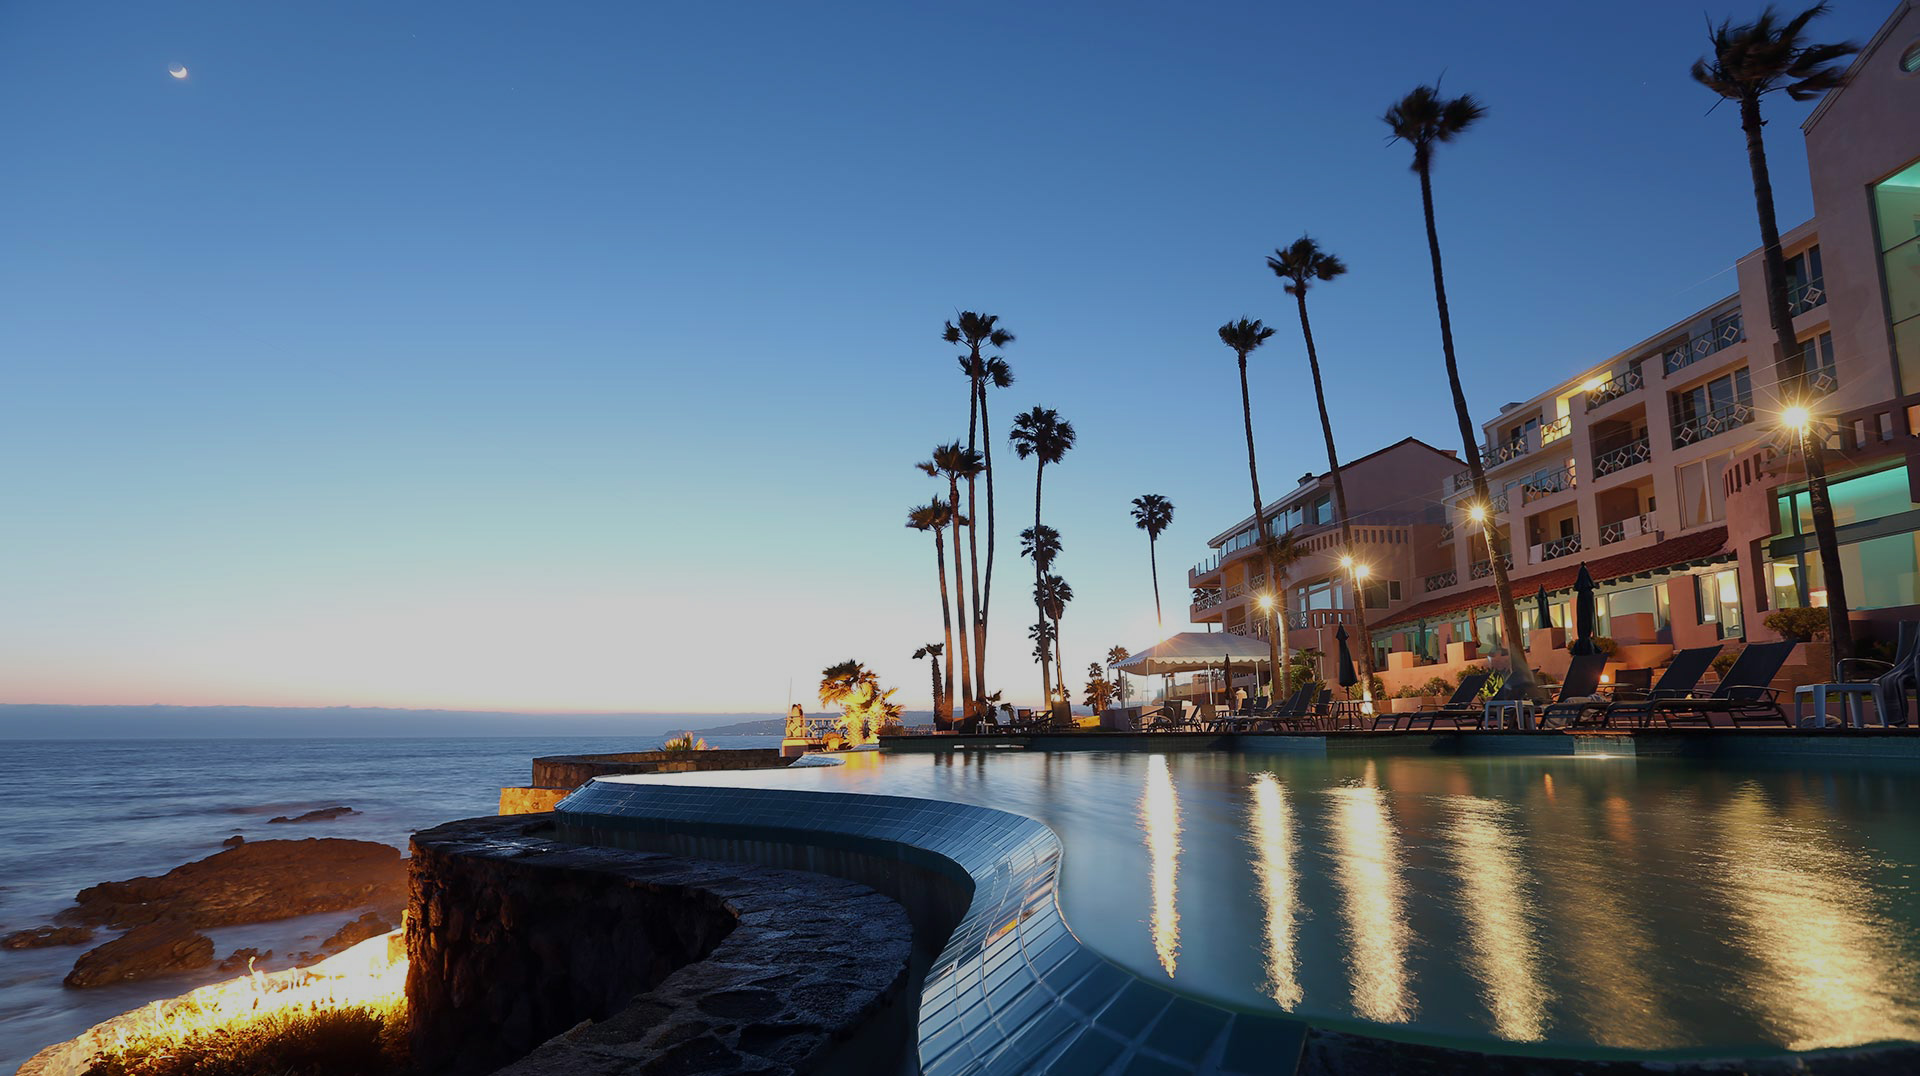 Las Rosas Hotel & Spa – Ensenada Baja California